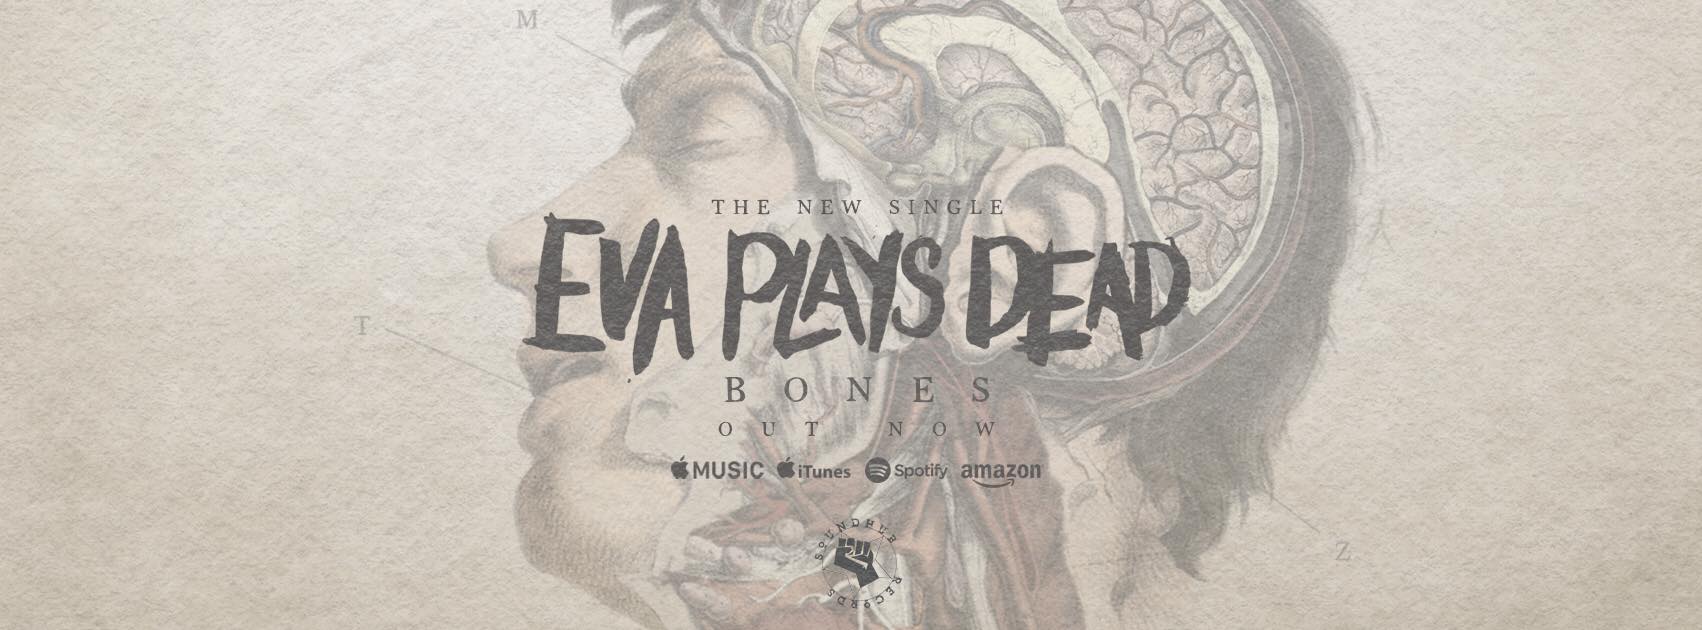 Eva Plays Dead - Bones